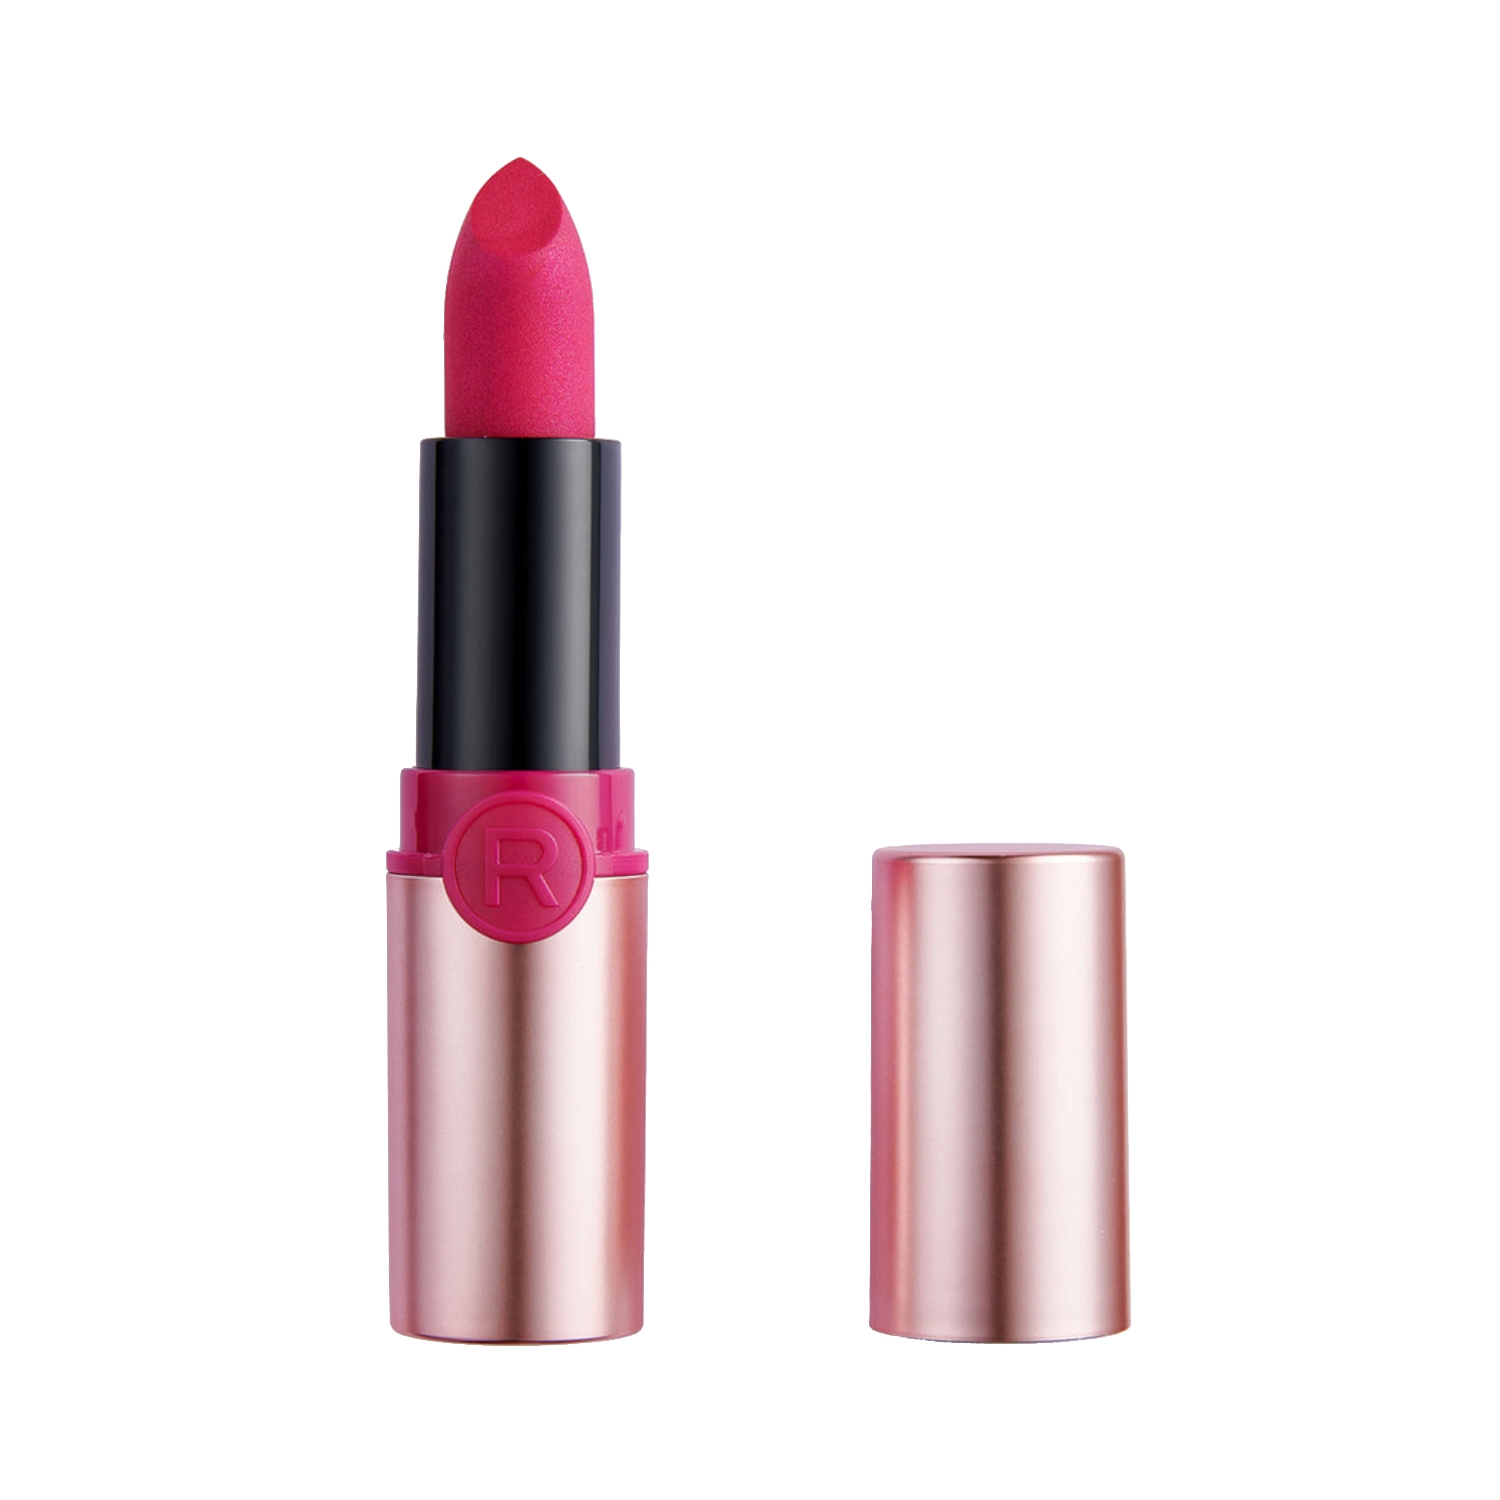 Makeup Revolution | Makeup Revolution Powder Matte Lipstick - Lust (3.5g)